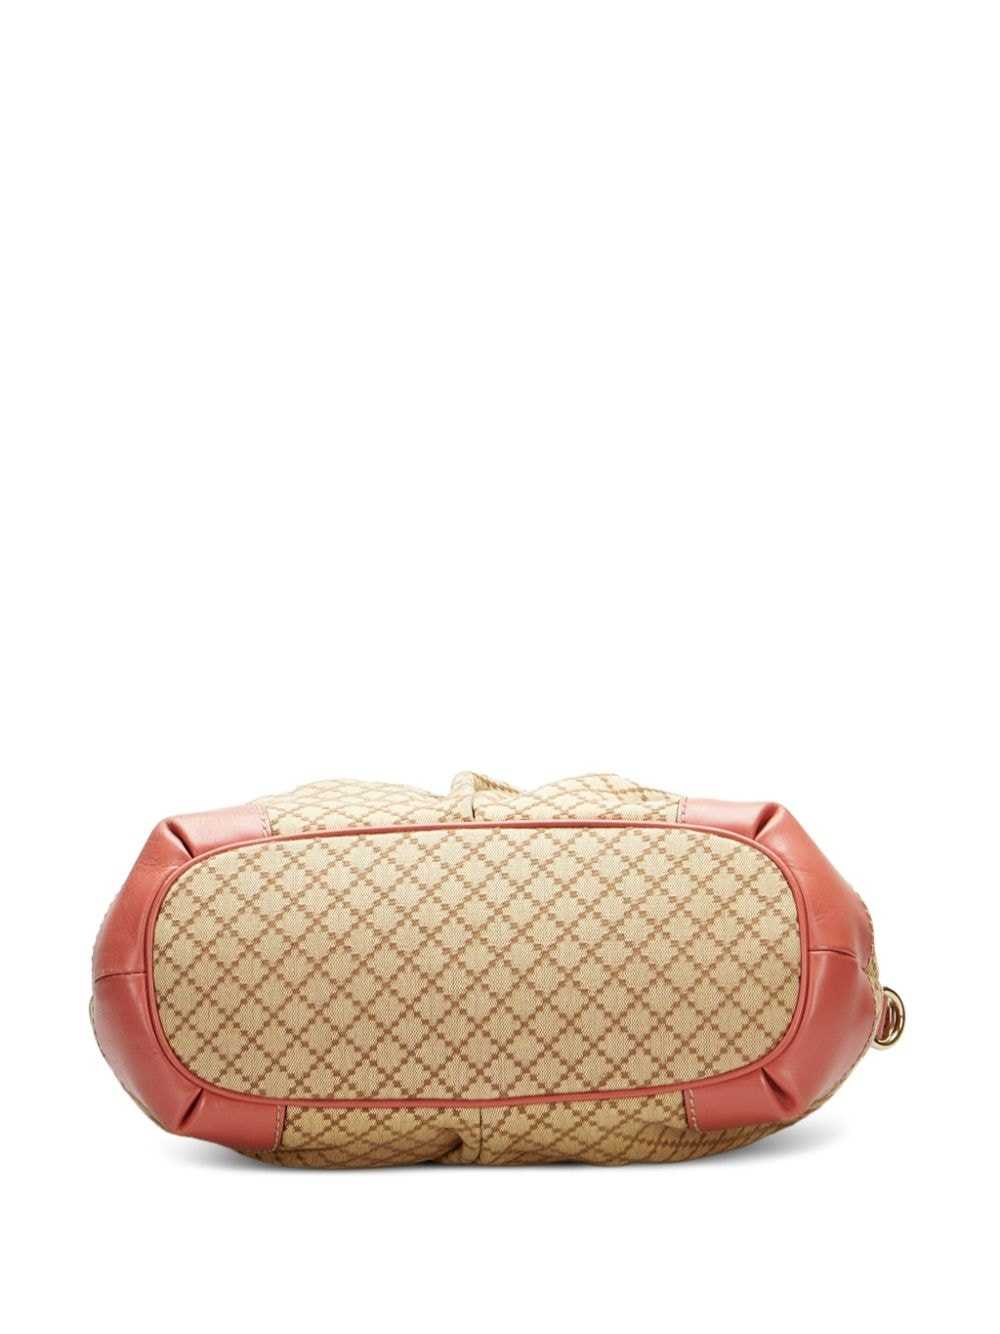 Gucci Pre-Owned Sukey diamante handbag - Neutrals - image 4